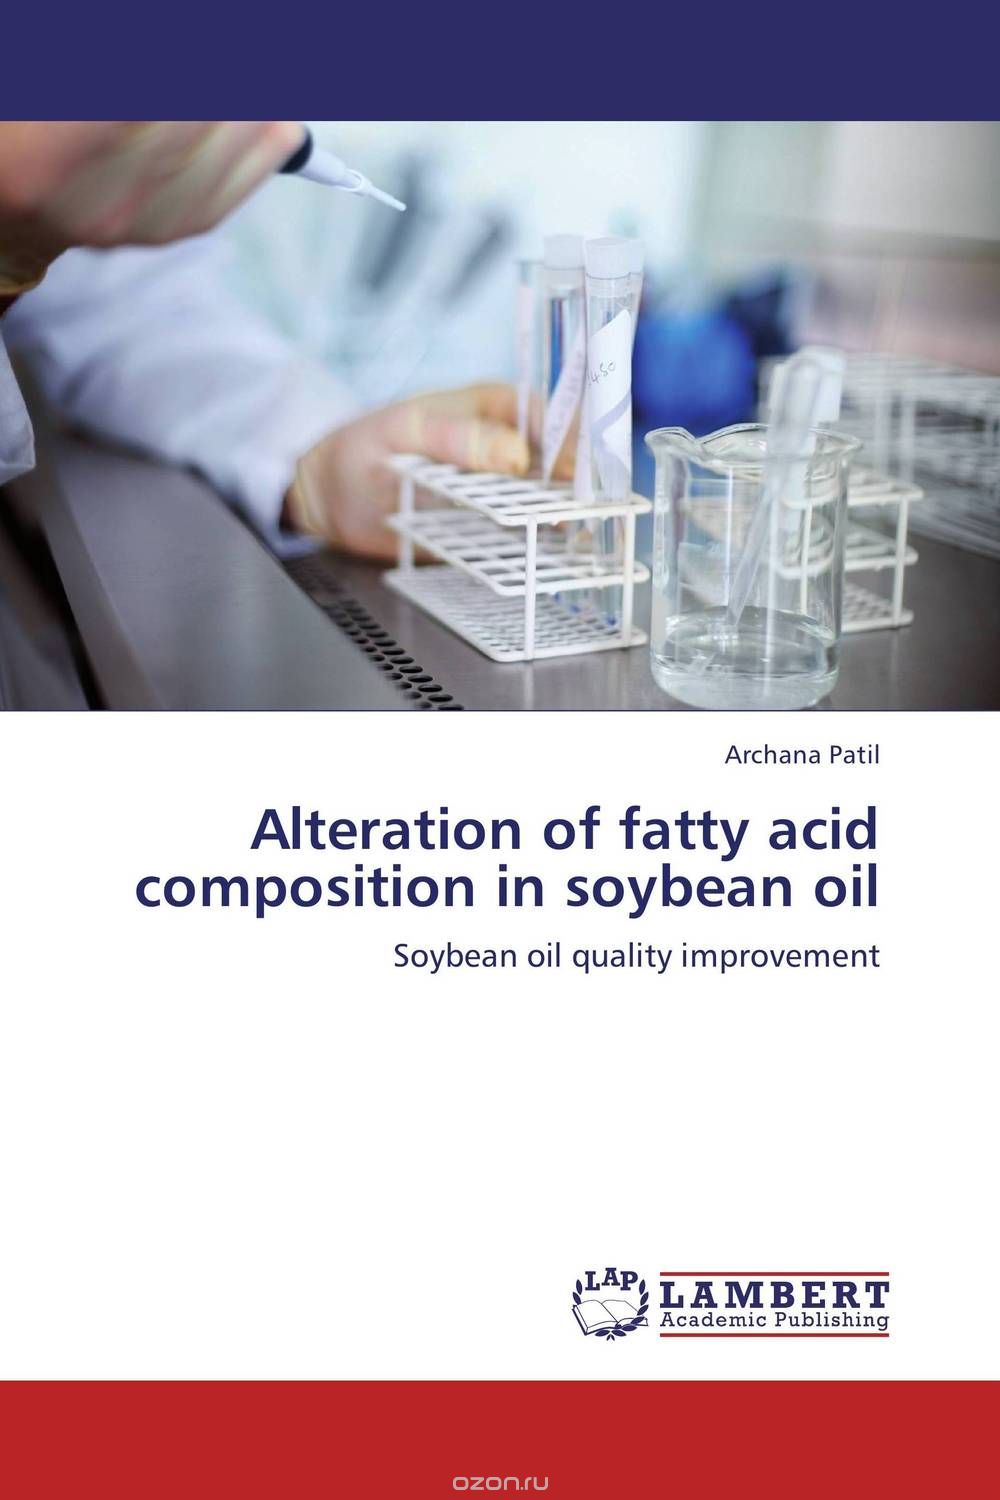 Скачать книгу "Alteration of fatty acid composition in soybean oil"